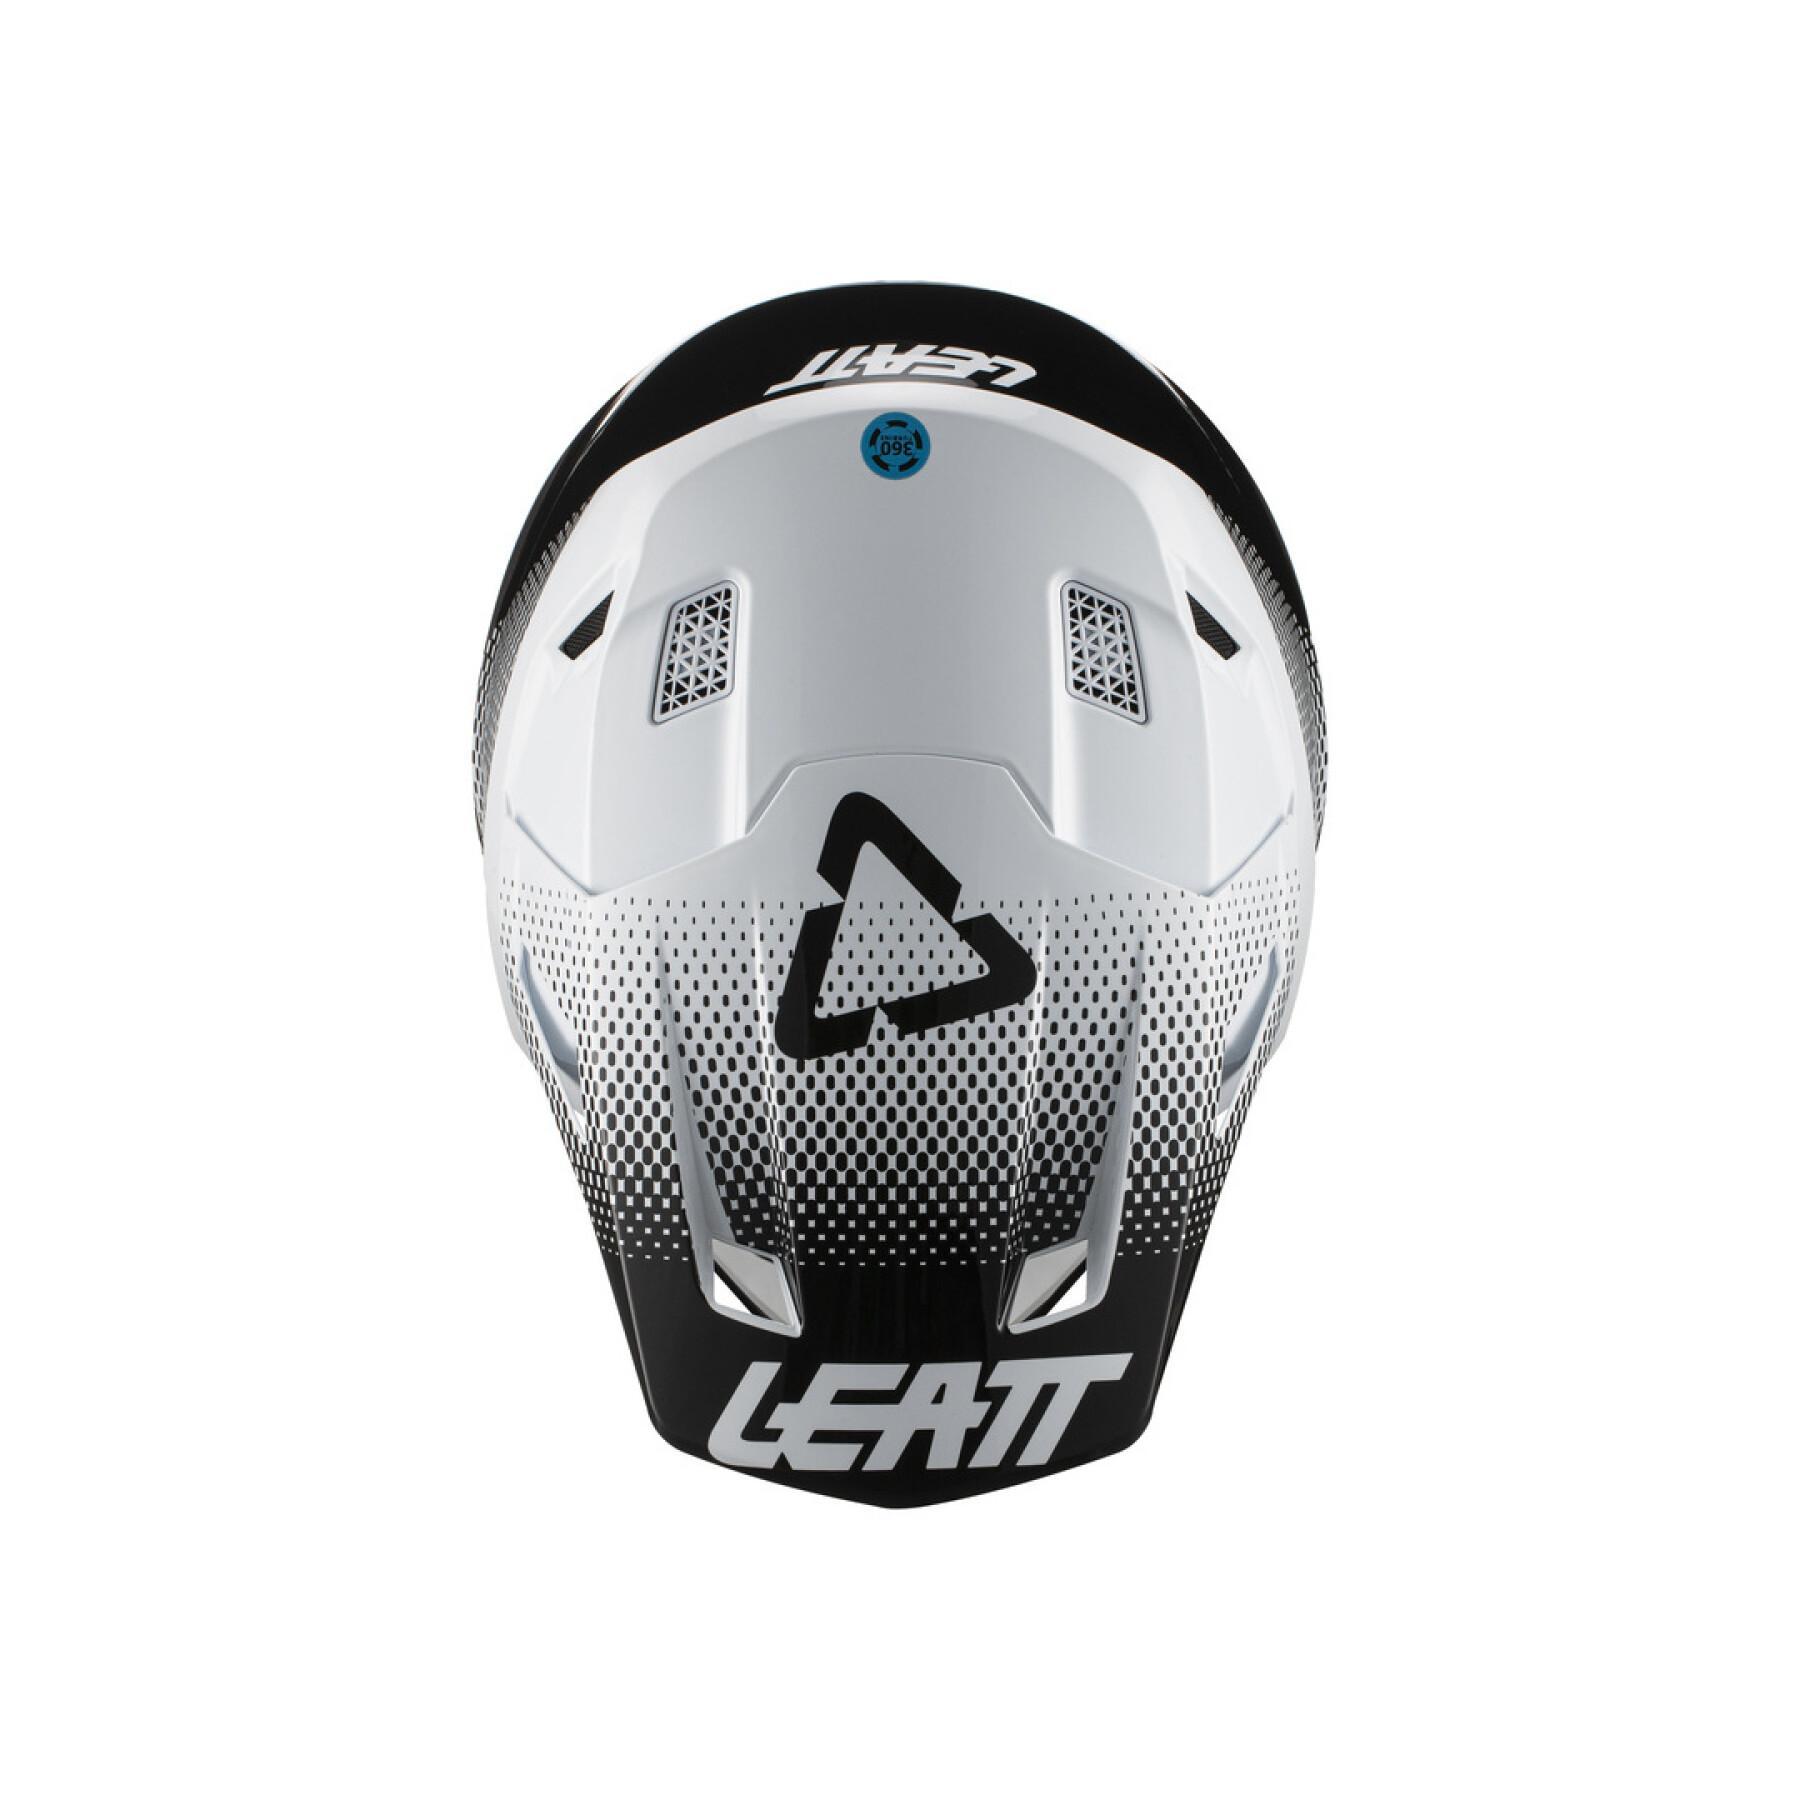 Kask motocyklowy wraz z okularami Leatt 7.5 V21.1